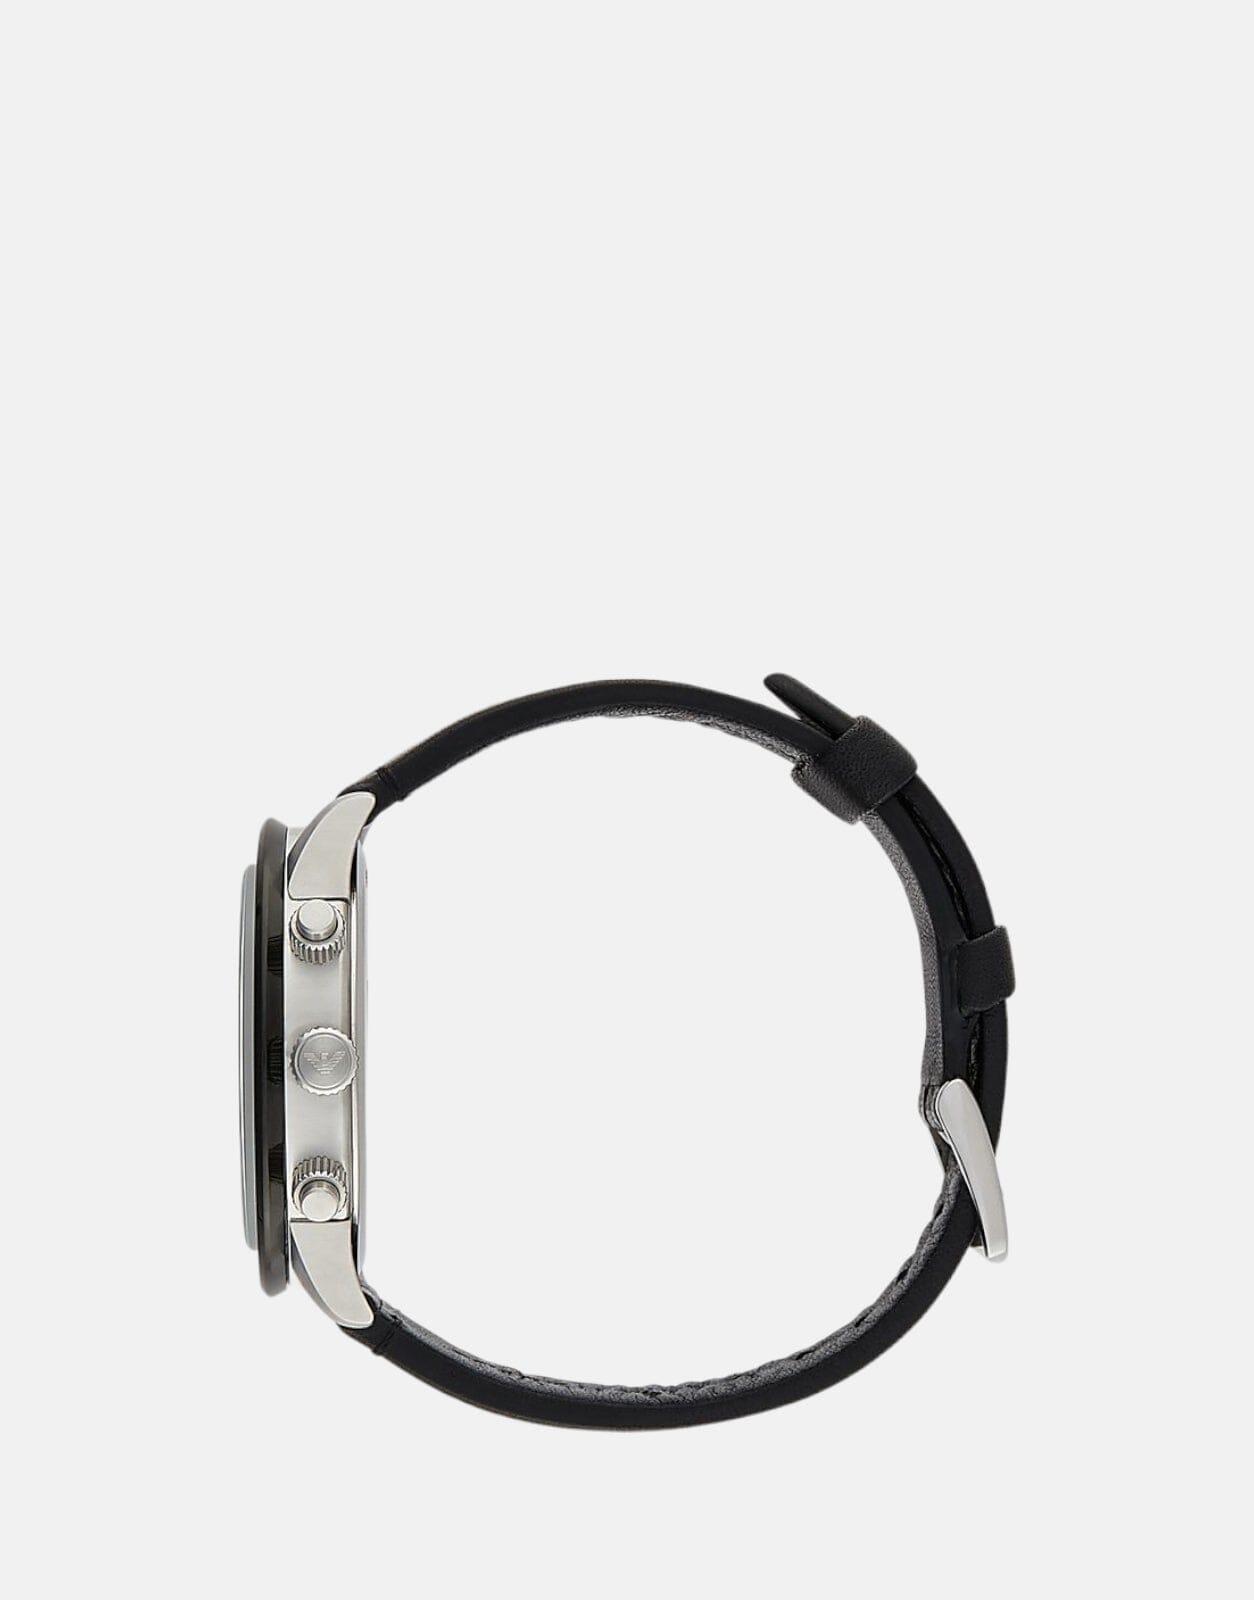 Armani Exchange Mario Black Leather Watch - Subwear